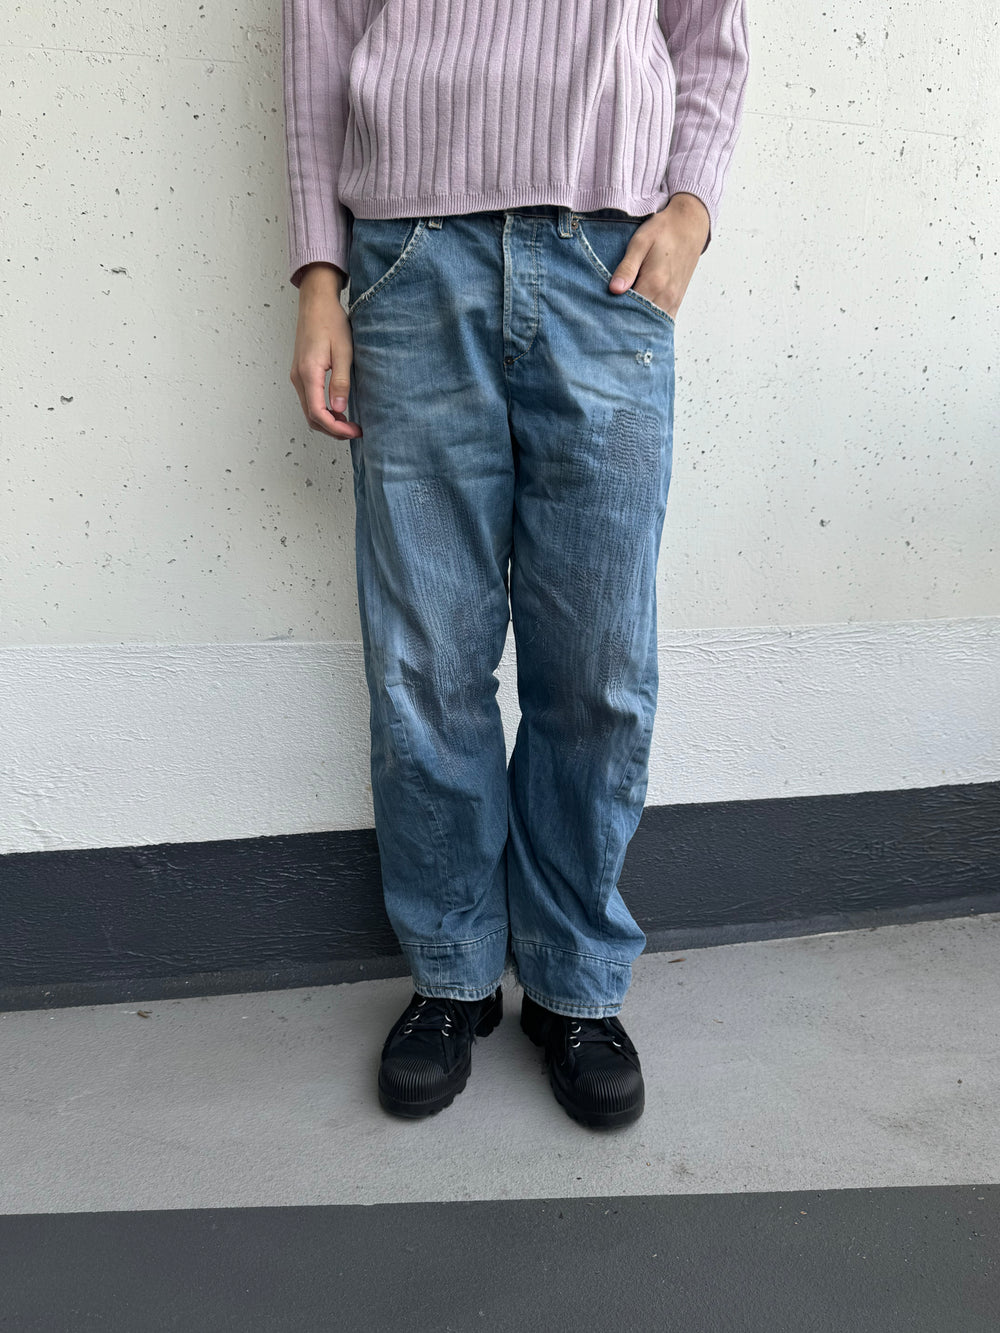 Vintage 90s Levi’s Engineered Stitched Jeans Denim Pants (W32)